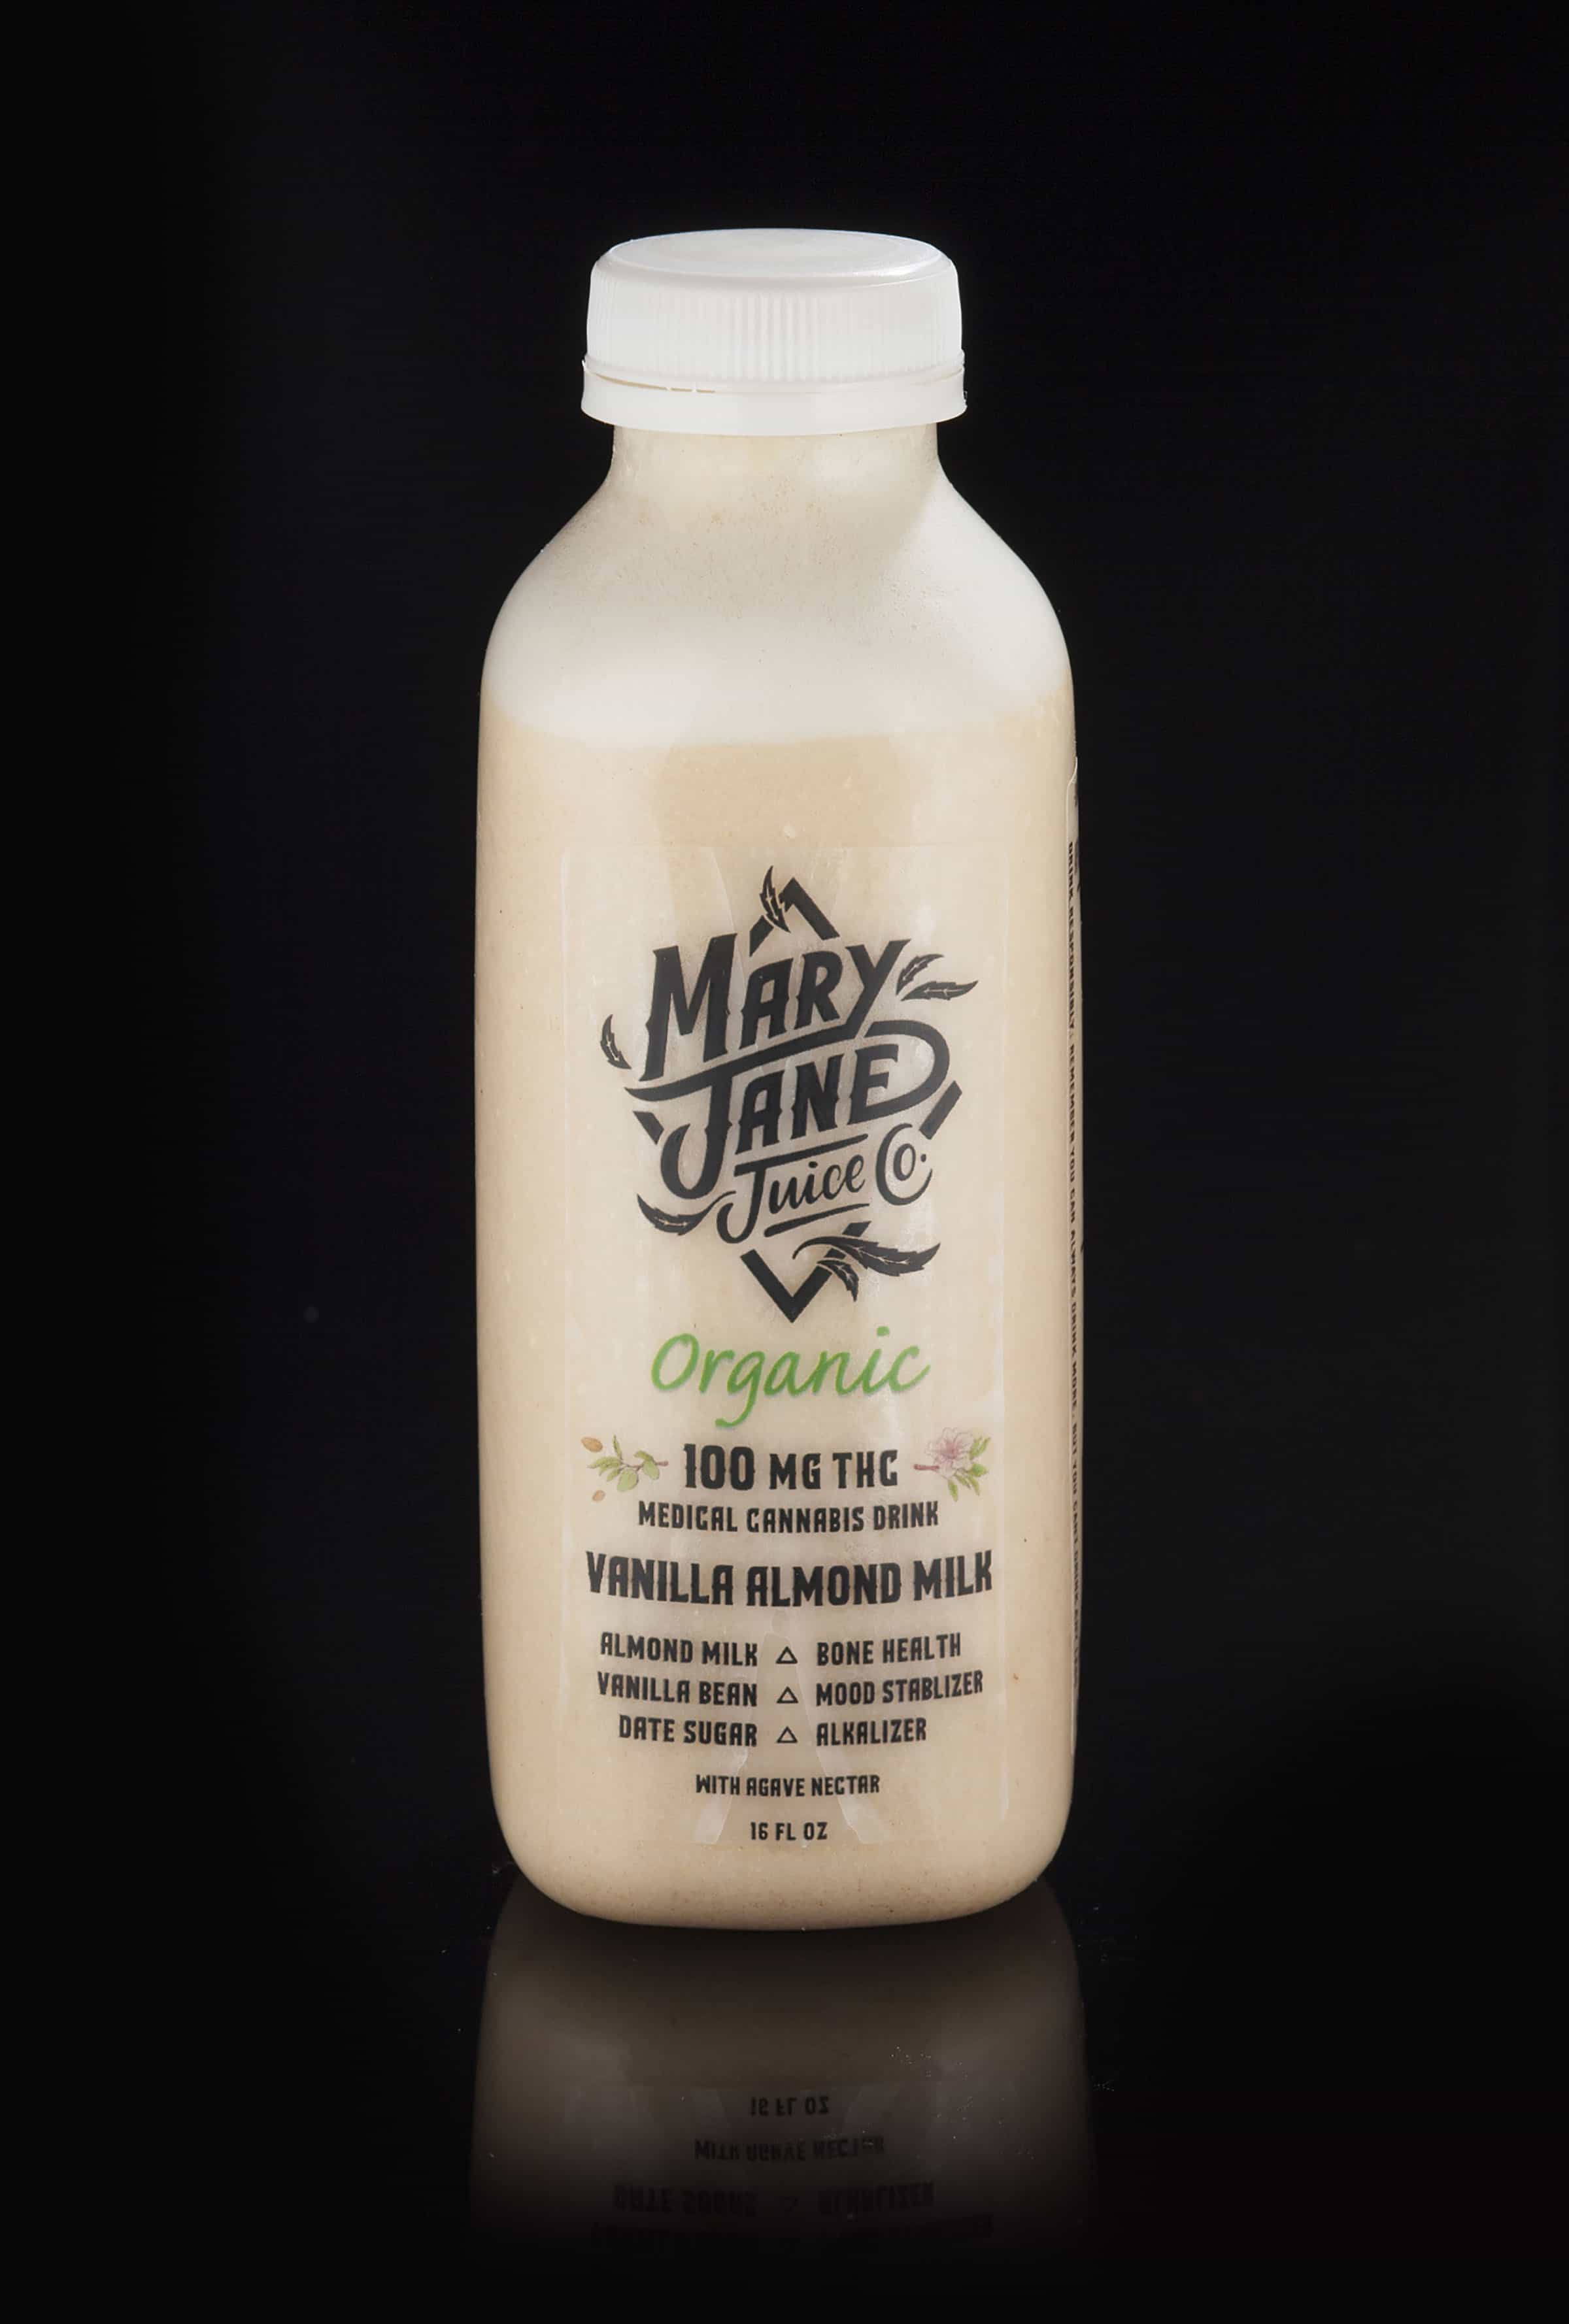 e33_organic_vanilla_almond_milk_mary_jane_juice_co